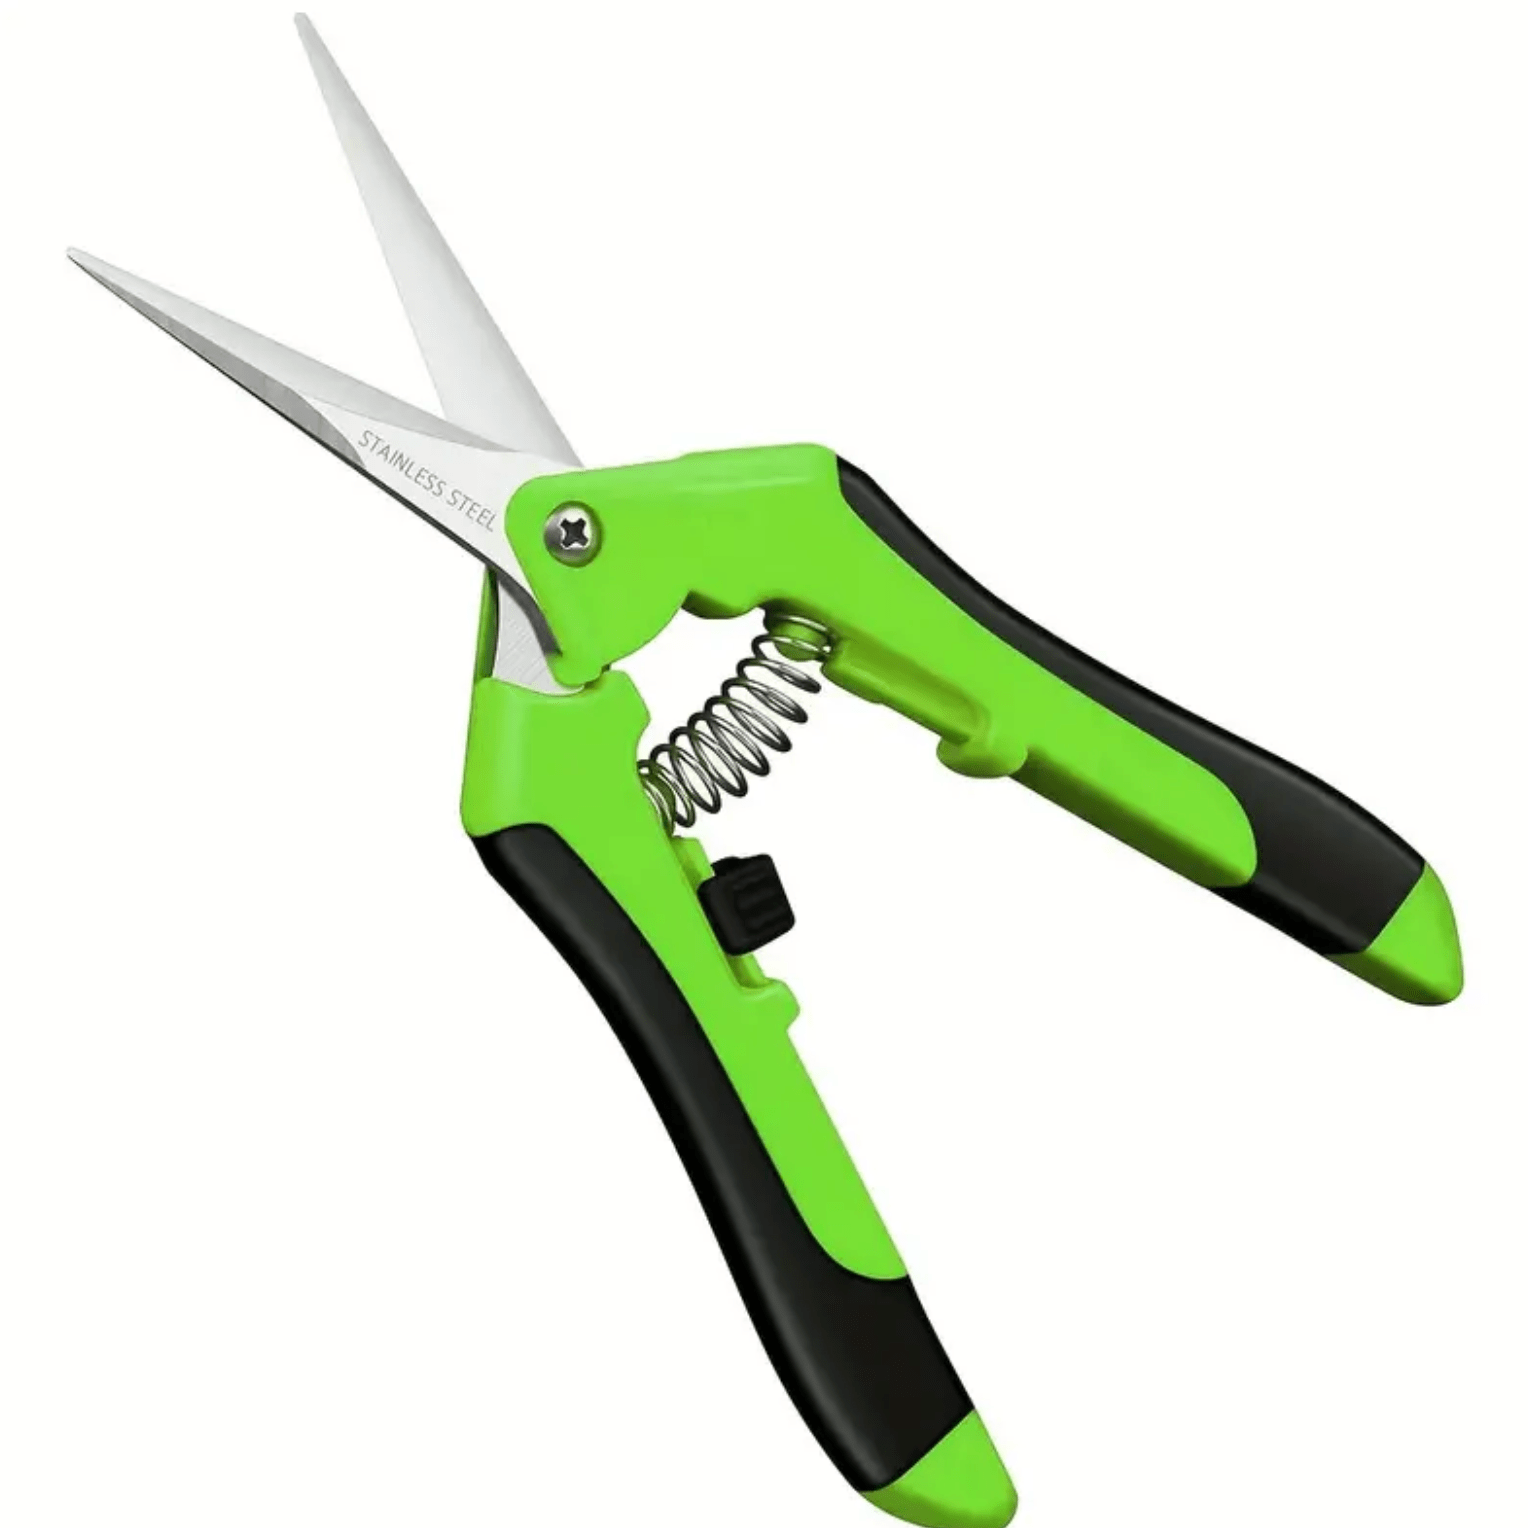 Green and Black Scissors 2.5" x 6.5" Stainless Steel Precision Scissors with ORANGE or GREEN Comfortable Handle, Beading Scissors, Basics Basics